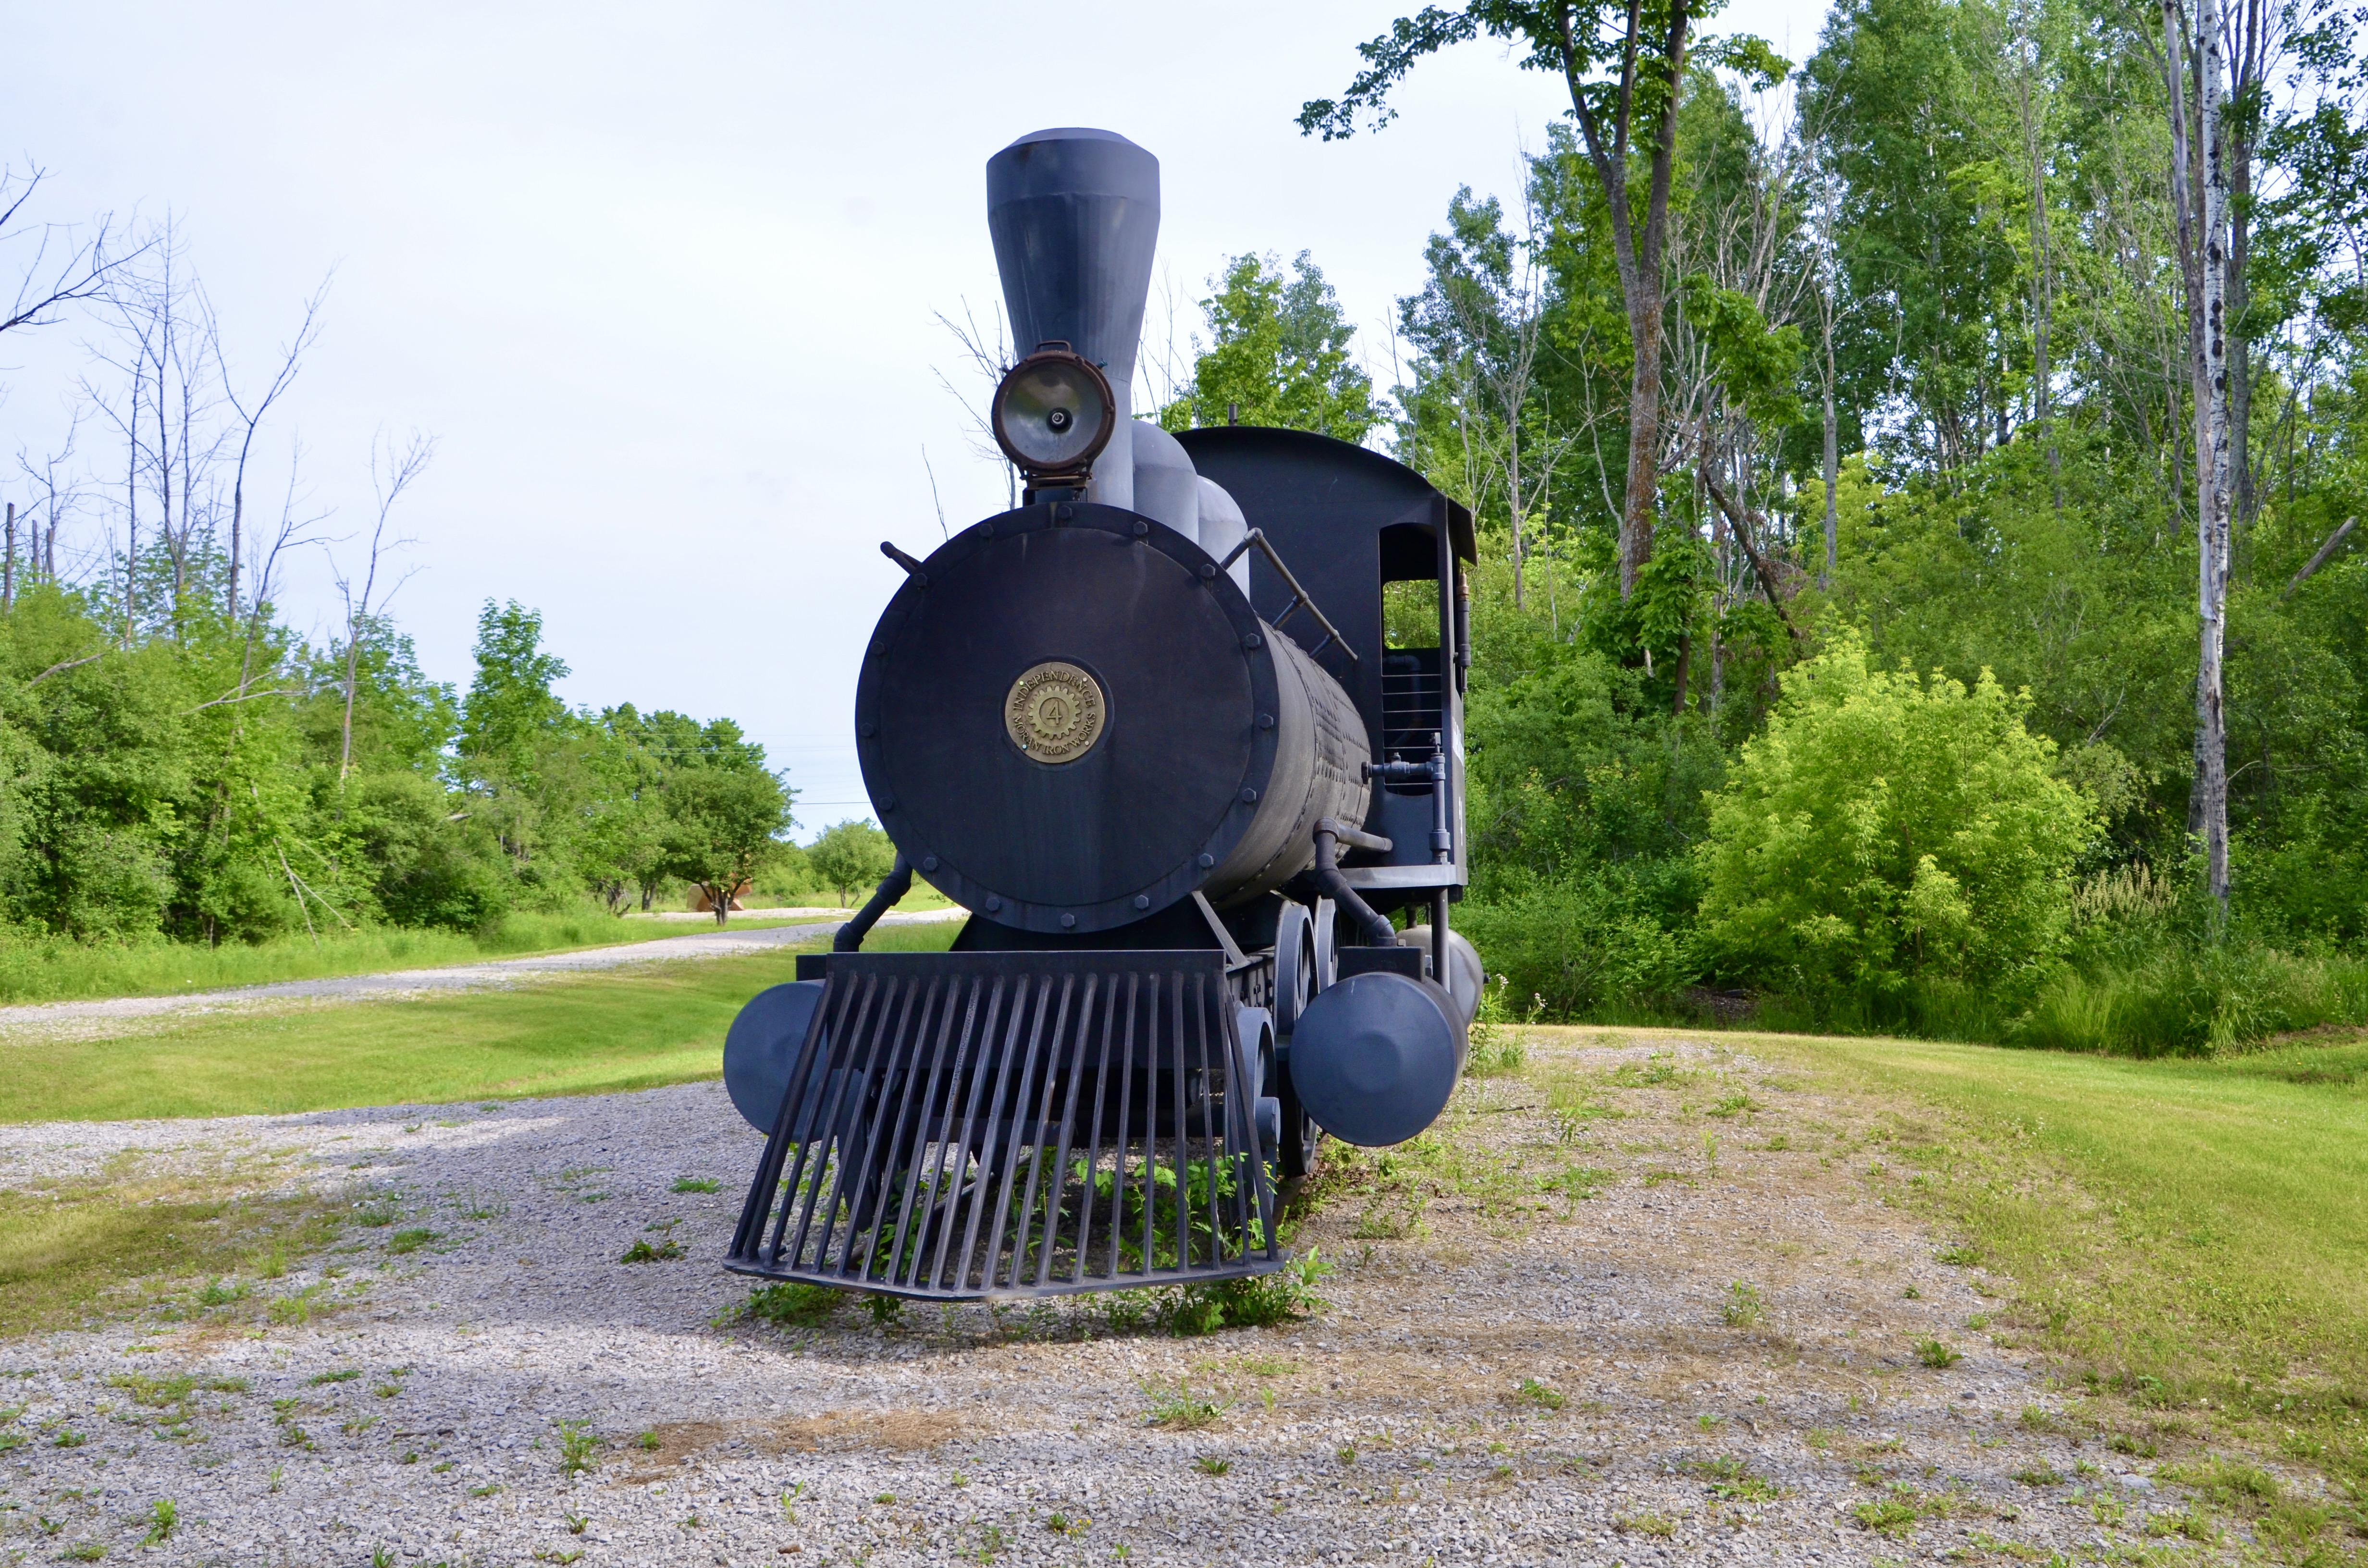 Lobdell & Emery Train Sculpture at Awakon Park in Onaway, June